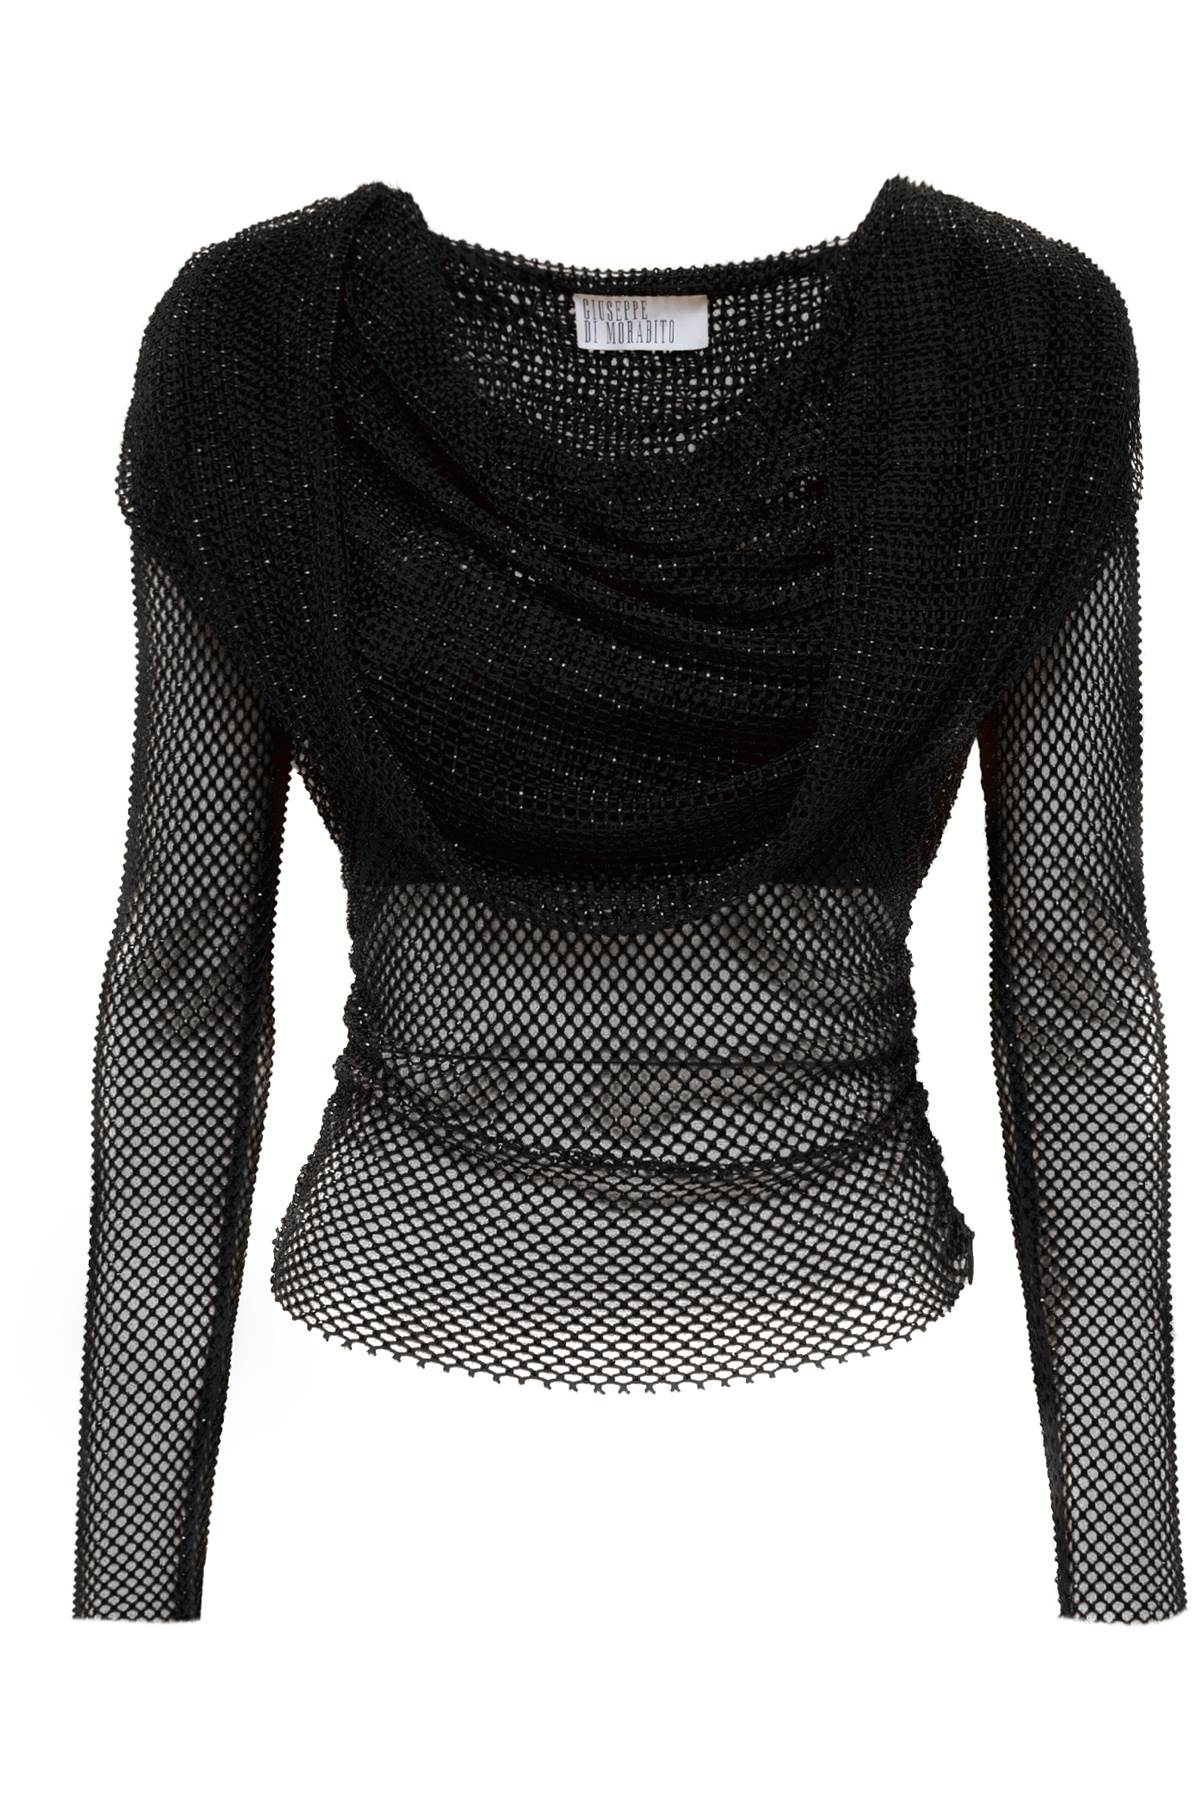 GIUSEPPE DI MORABITO Black Rhinestone Fishnet Hooded Top for Women - FW23 Collection